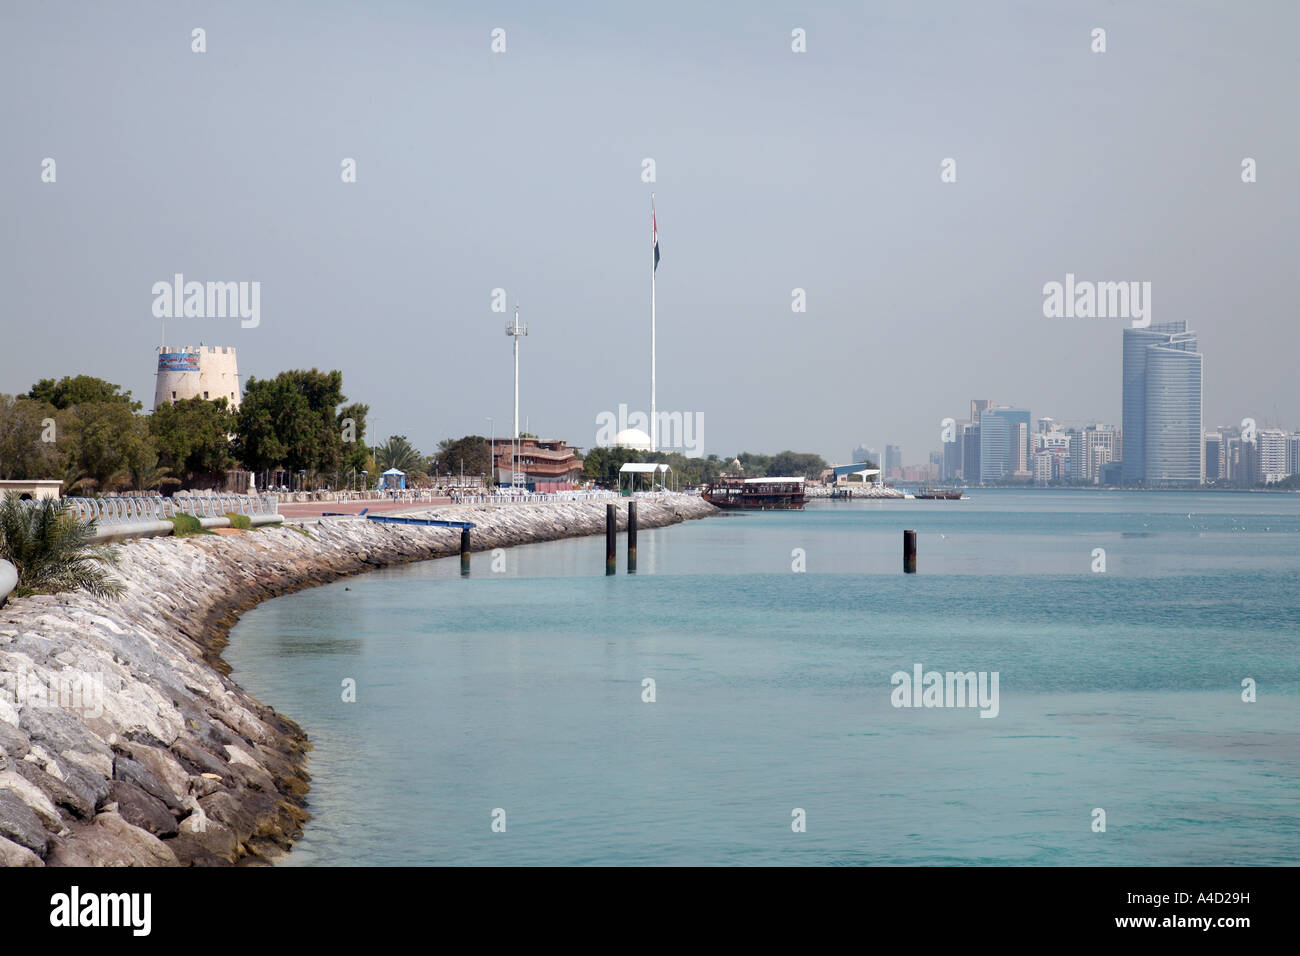 View along the coastline towards flag, Abu Dhabi city, UAE Stock Photo